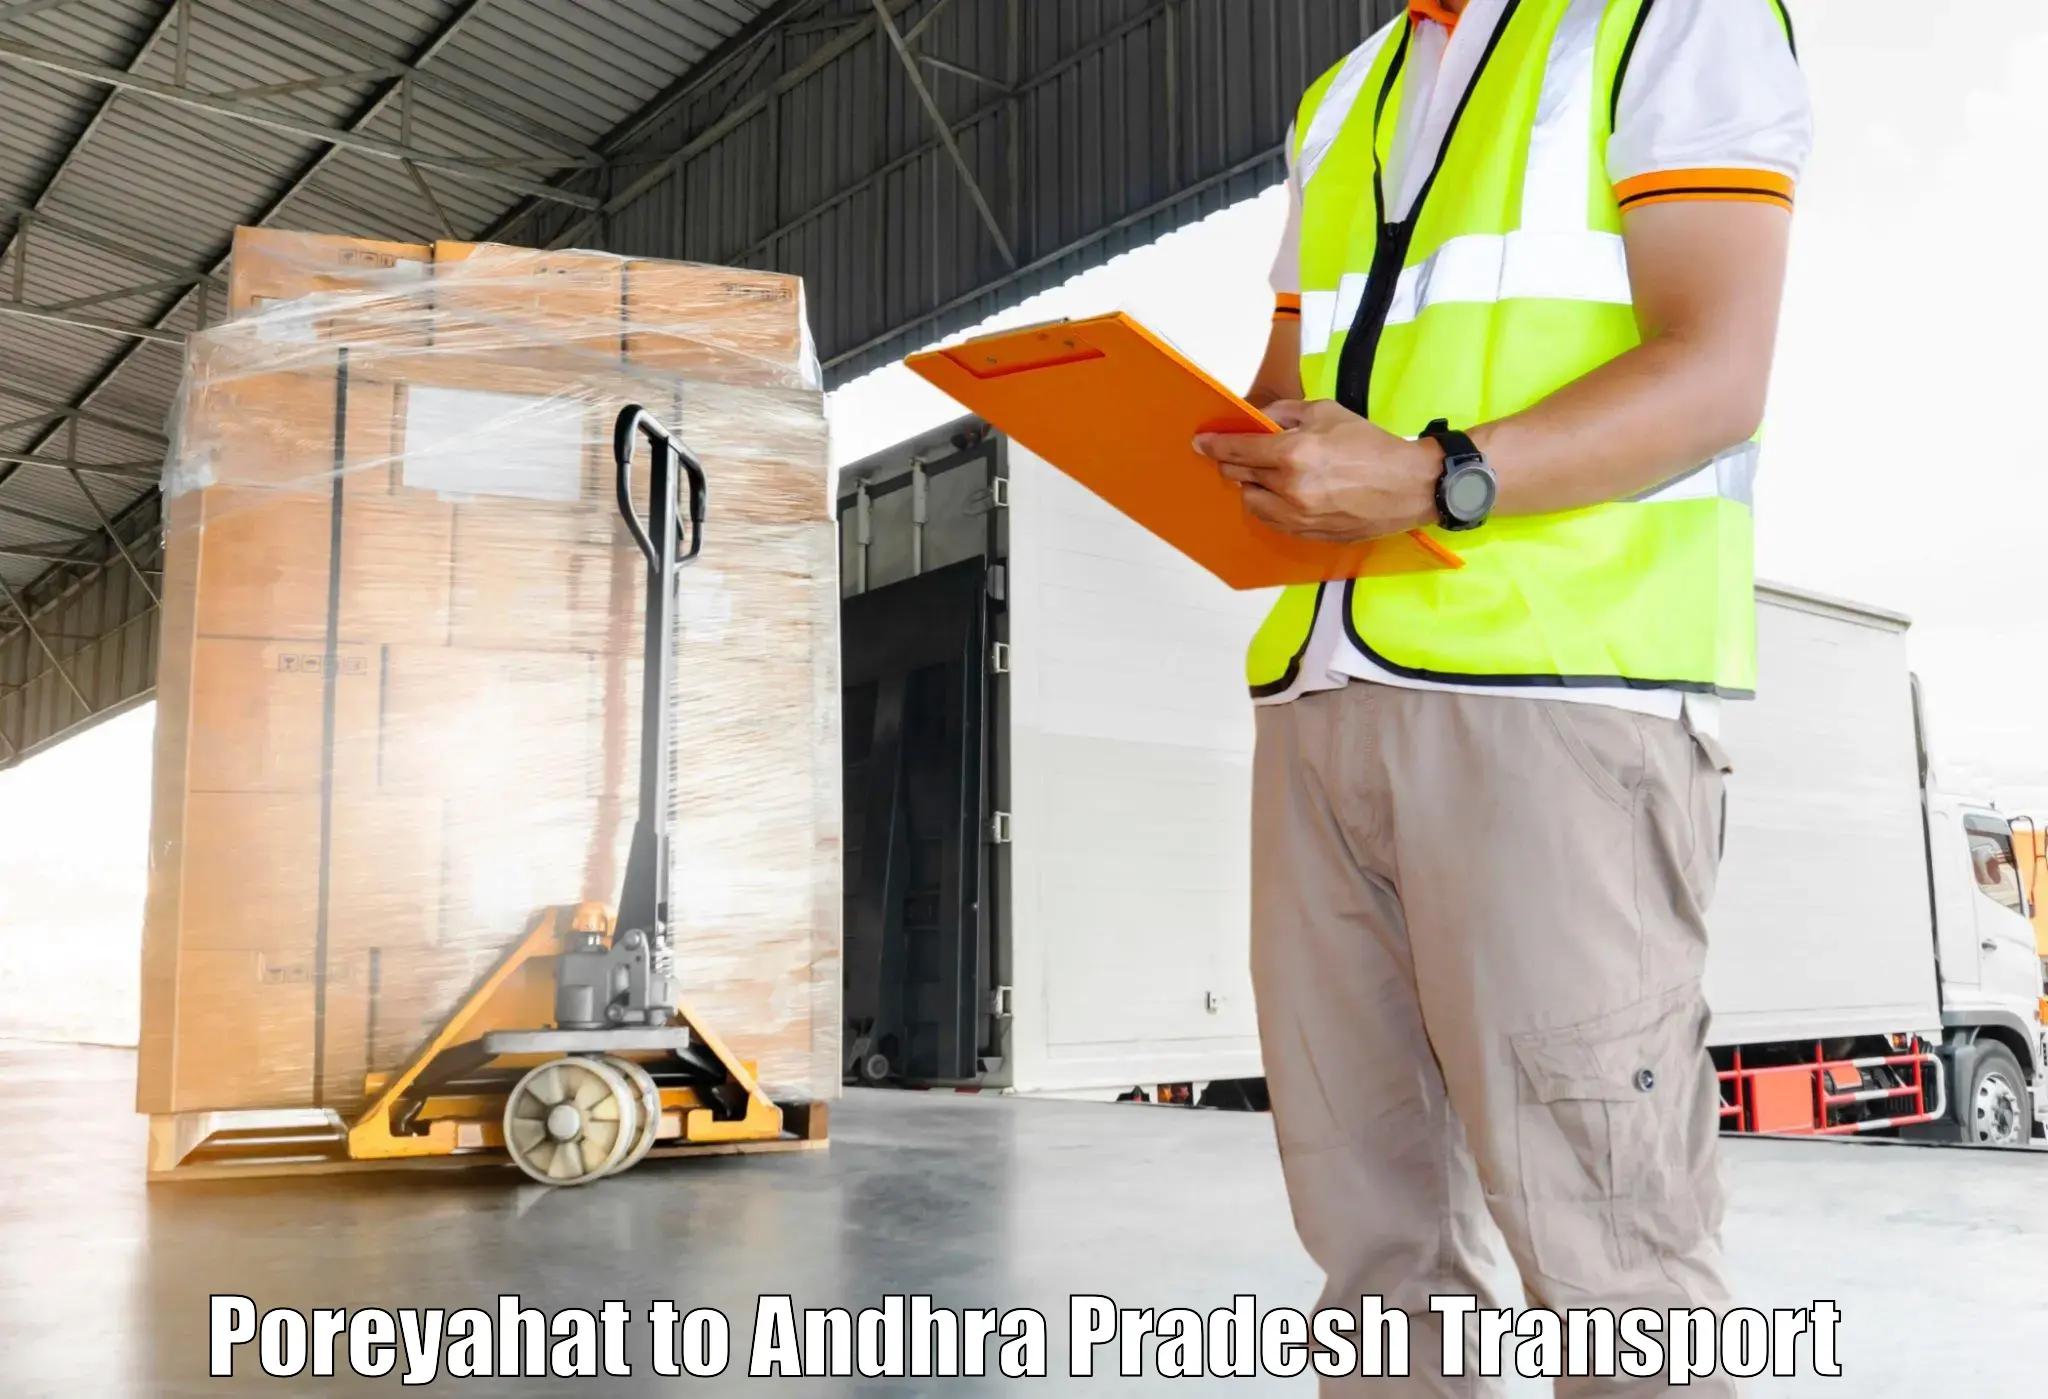 Two wheeler parcel service Poreyahat to Kudair